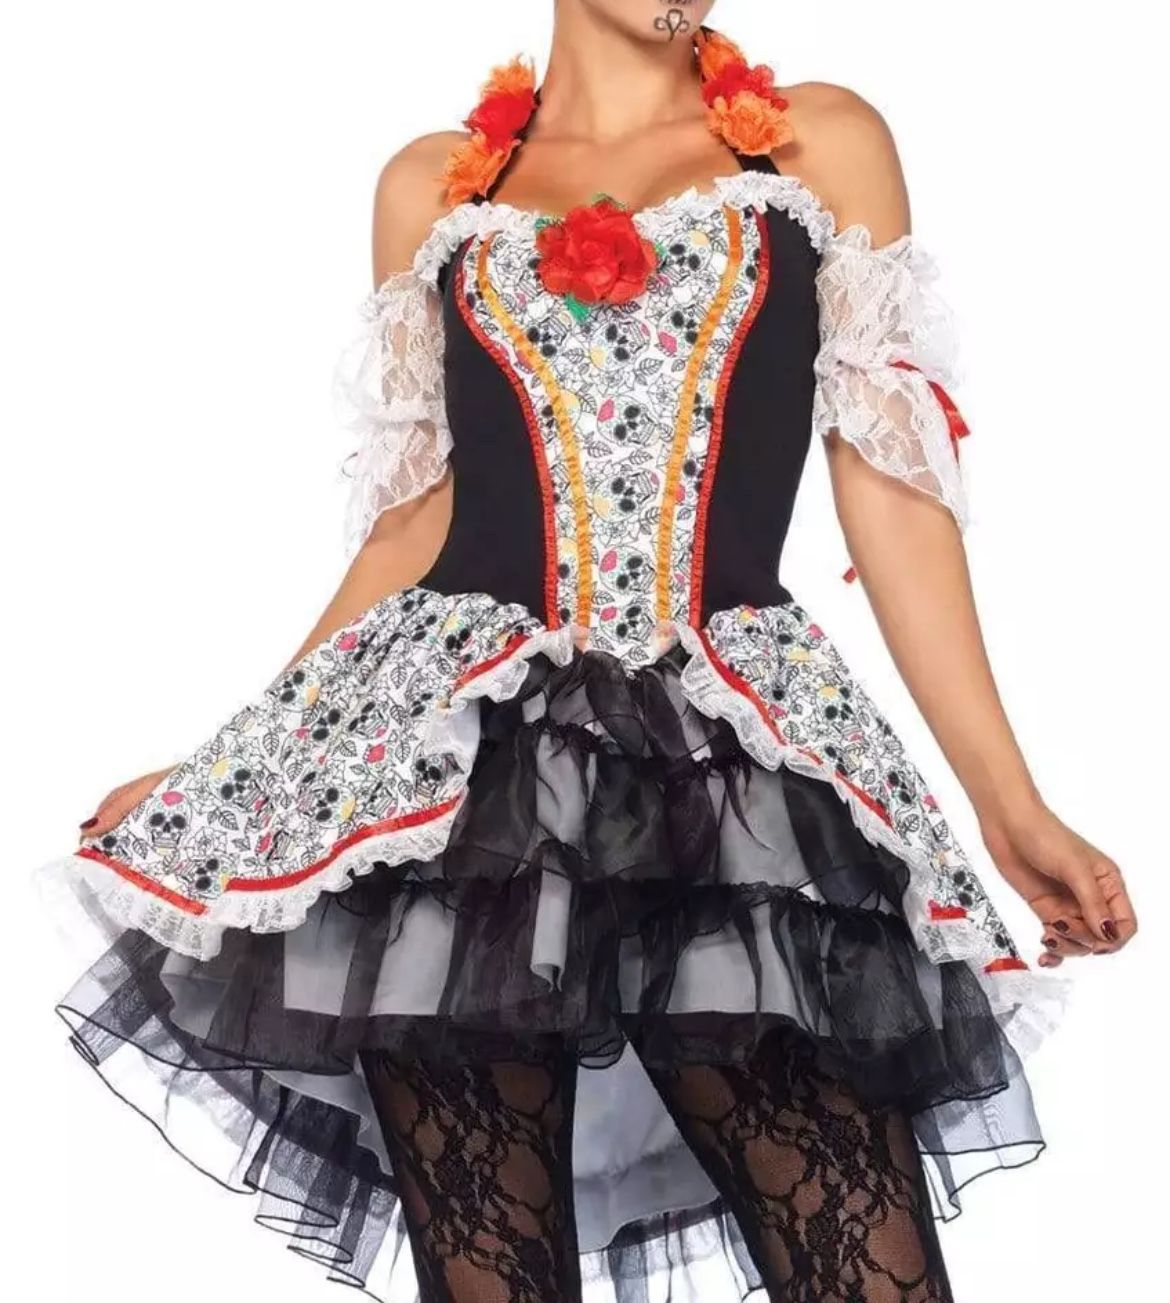 New Leg Avenue Sugar Skull Senorita Halloween Cosplay Costume Size 3/4X  